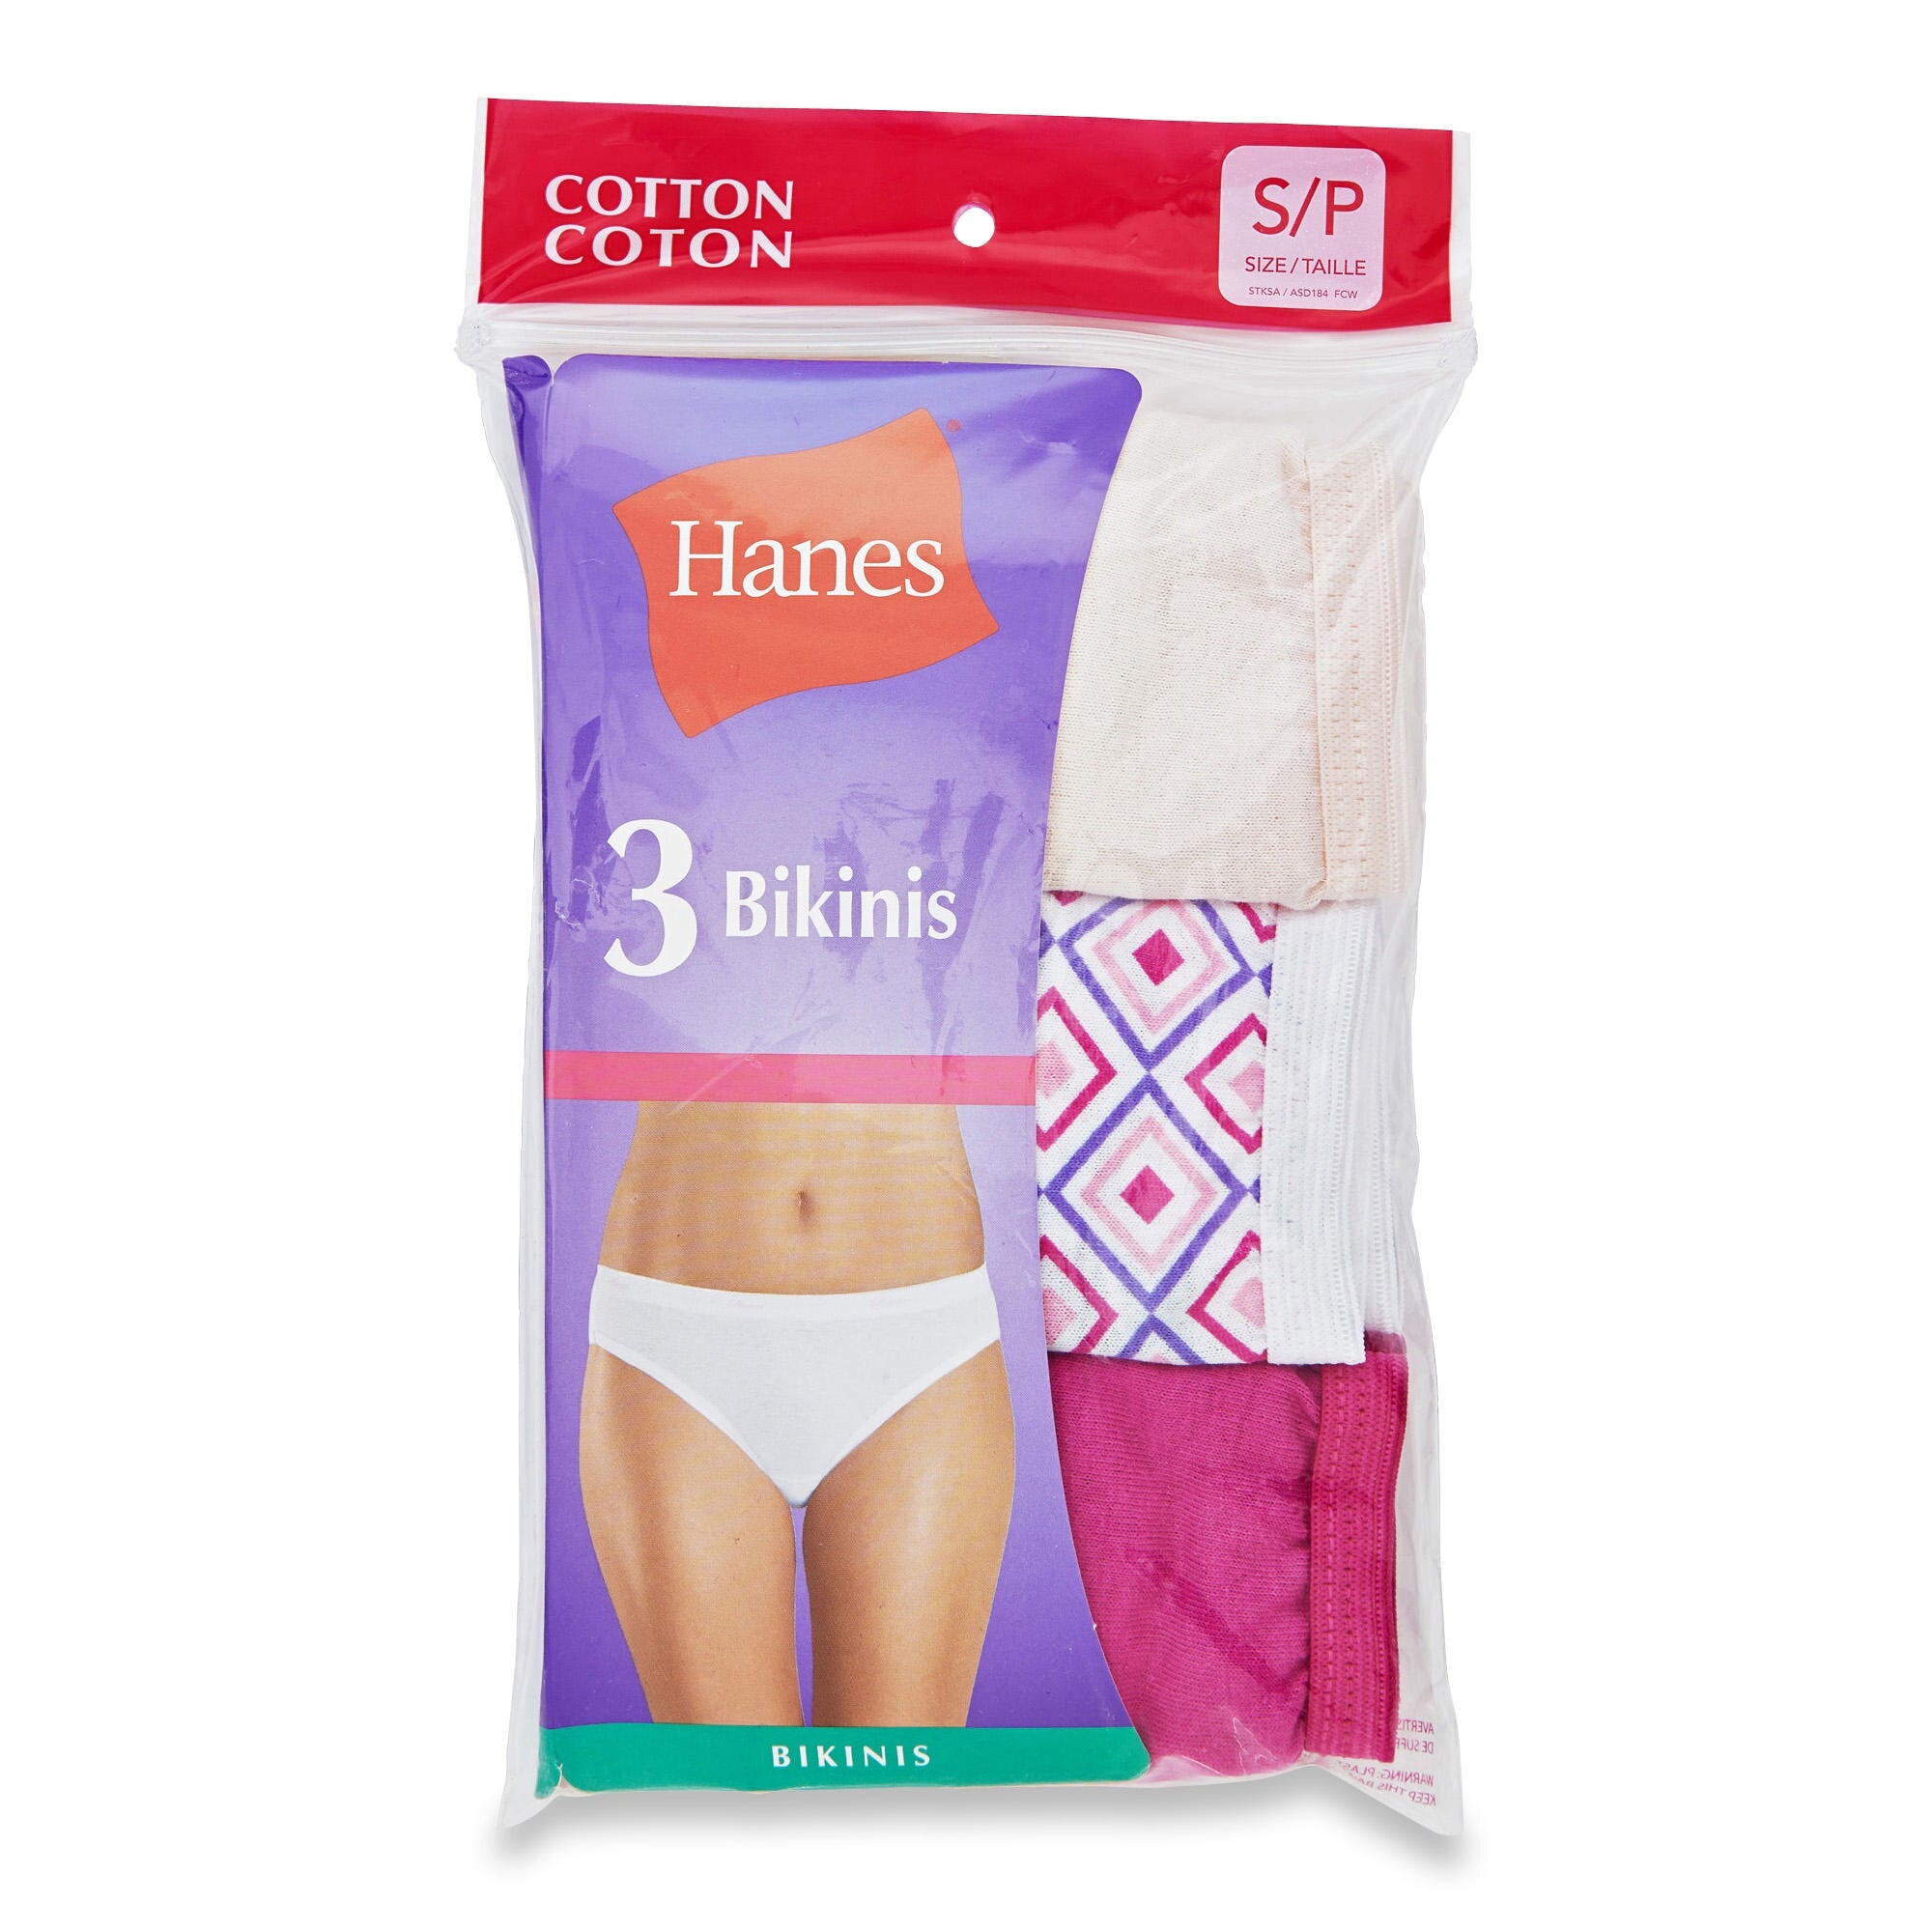 Hanes Women's Cotton Bikini, 3-Pack